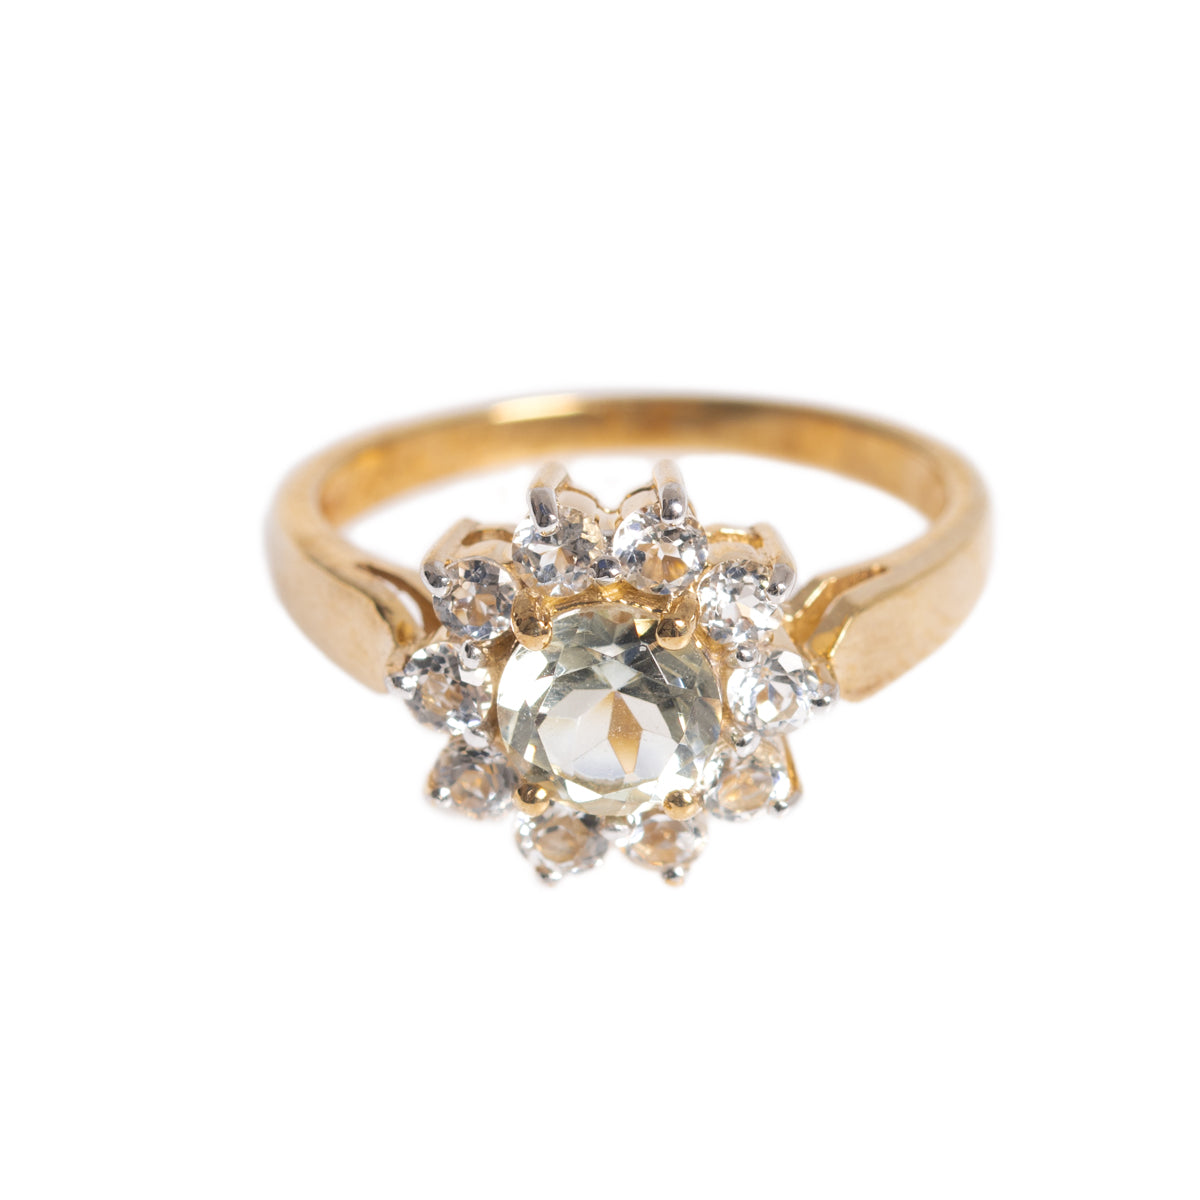 9ct Gold Ring With Aquamarine Gemstone & Halo Design Hallmarked 2007 (A1376)